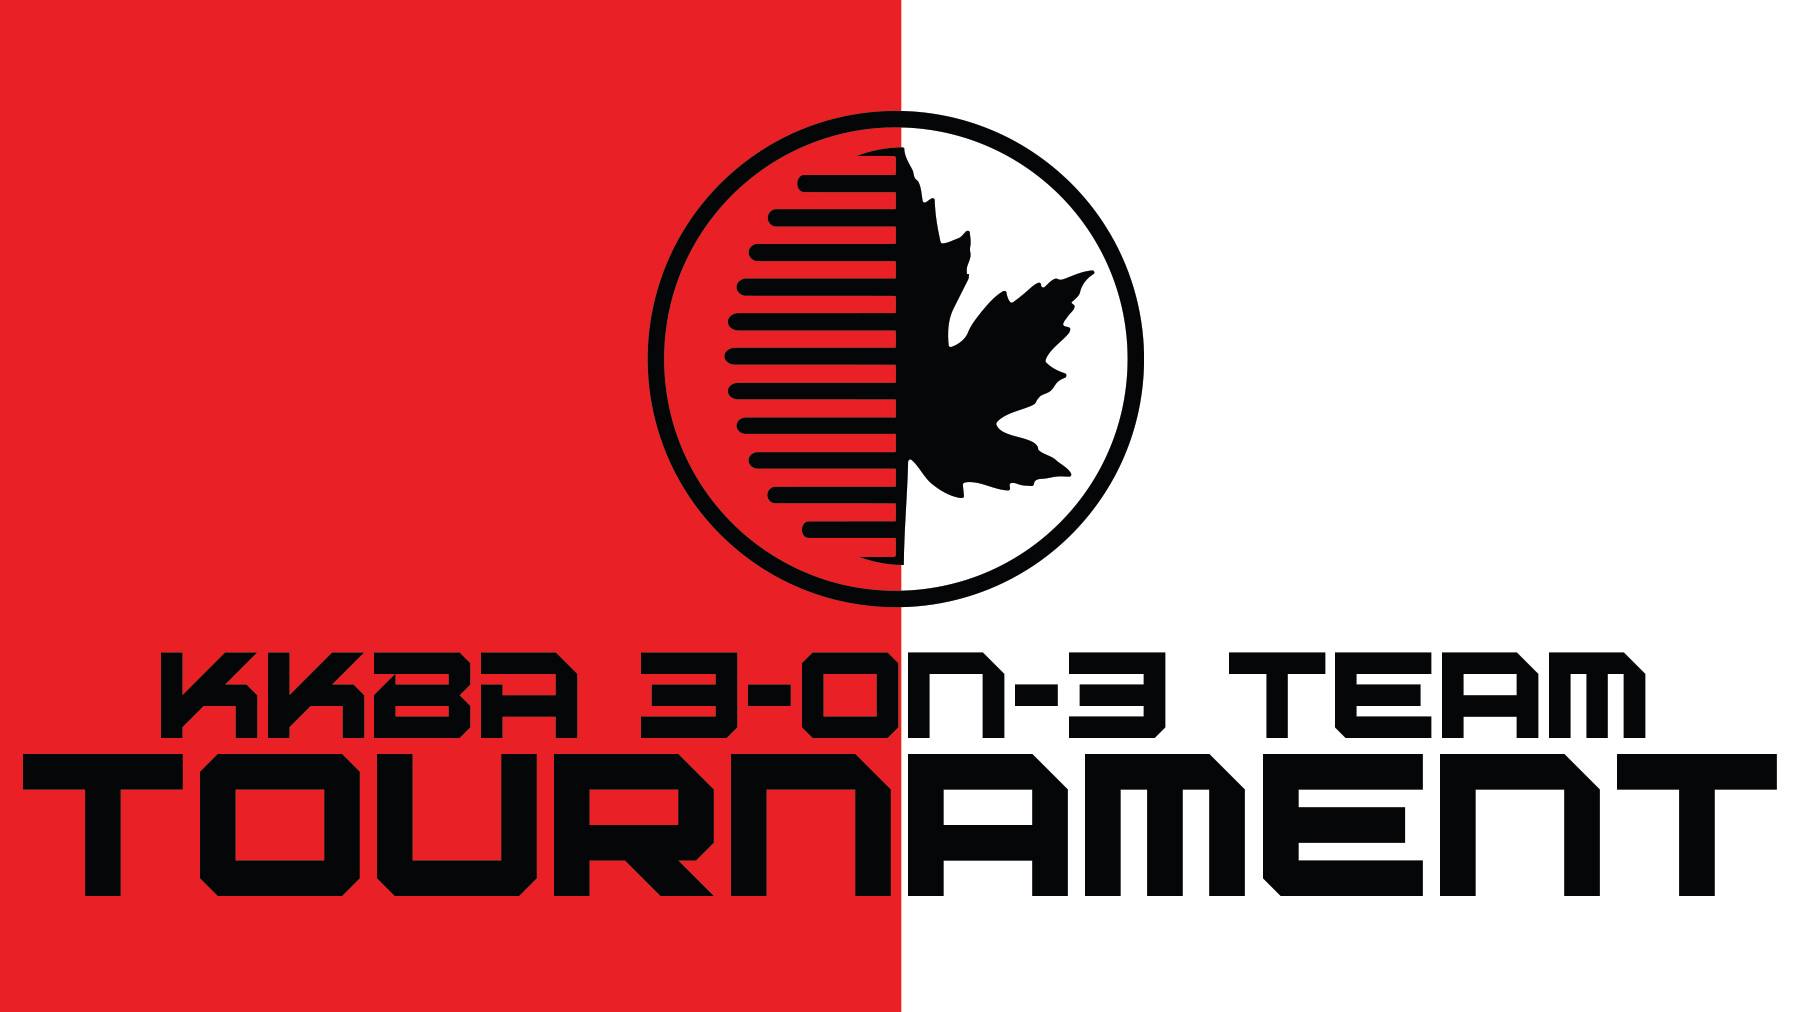 In-club Fall 2018 Team Tournament